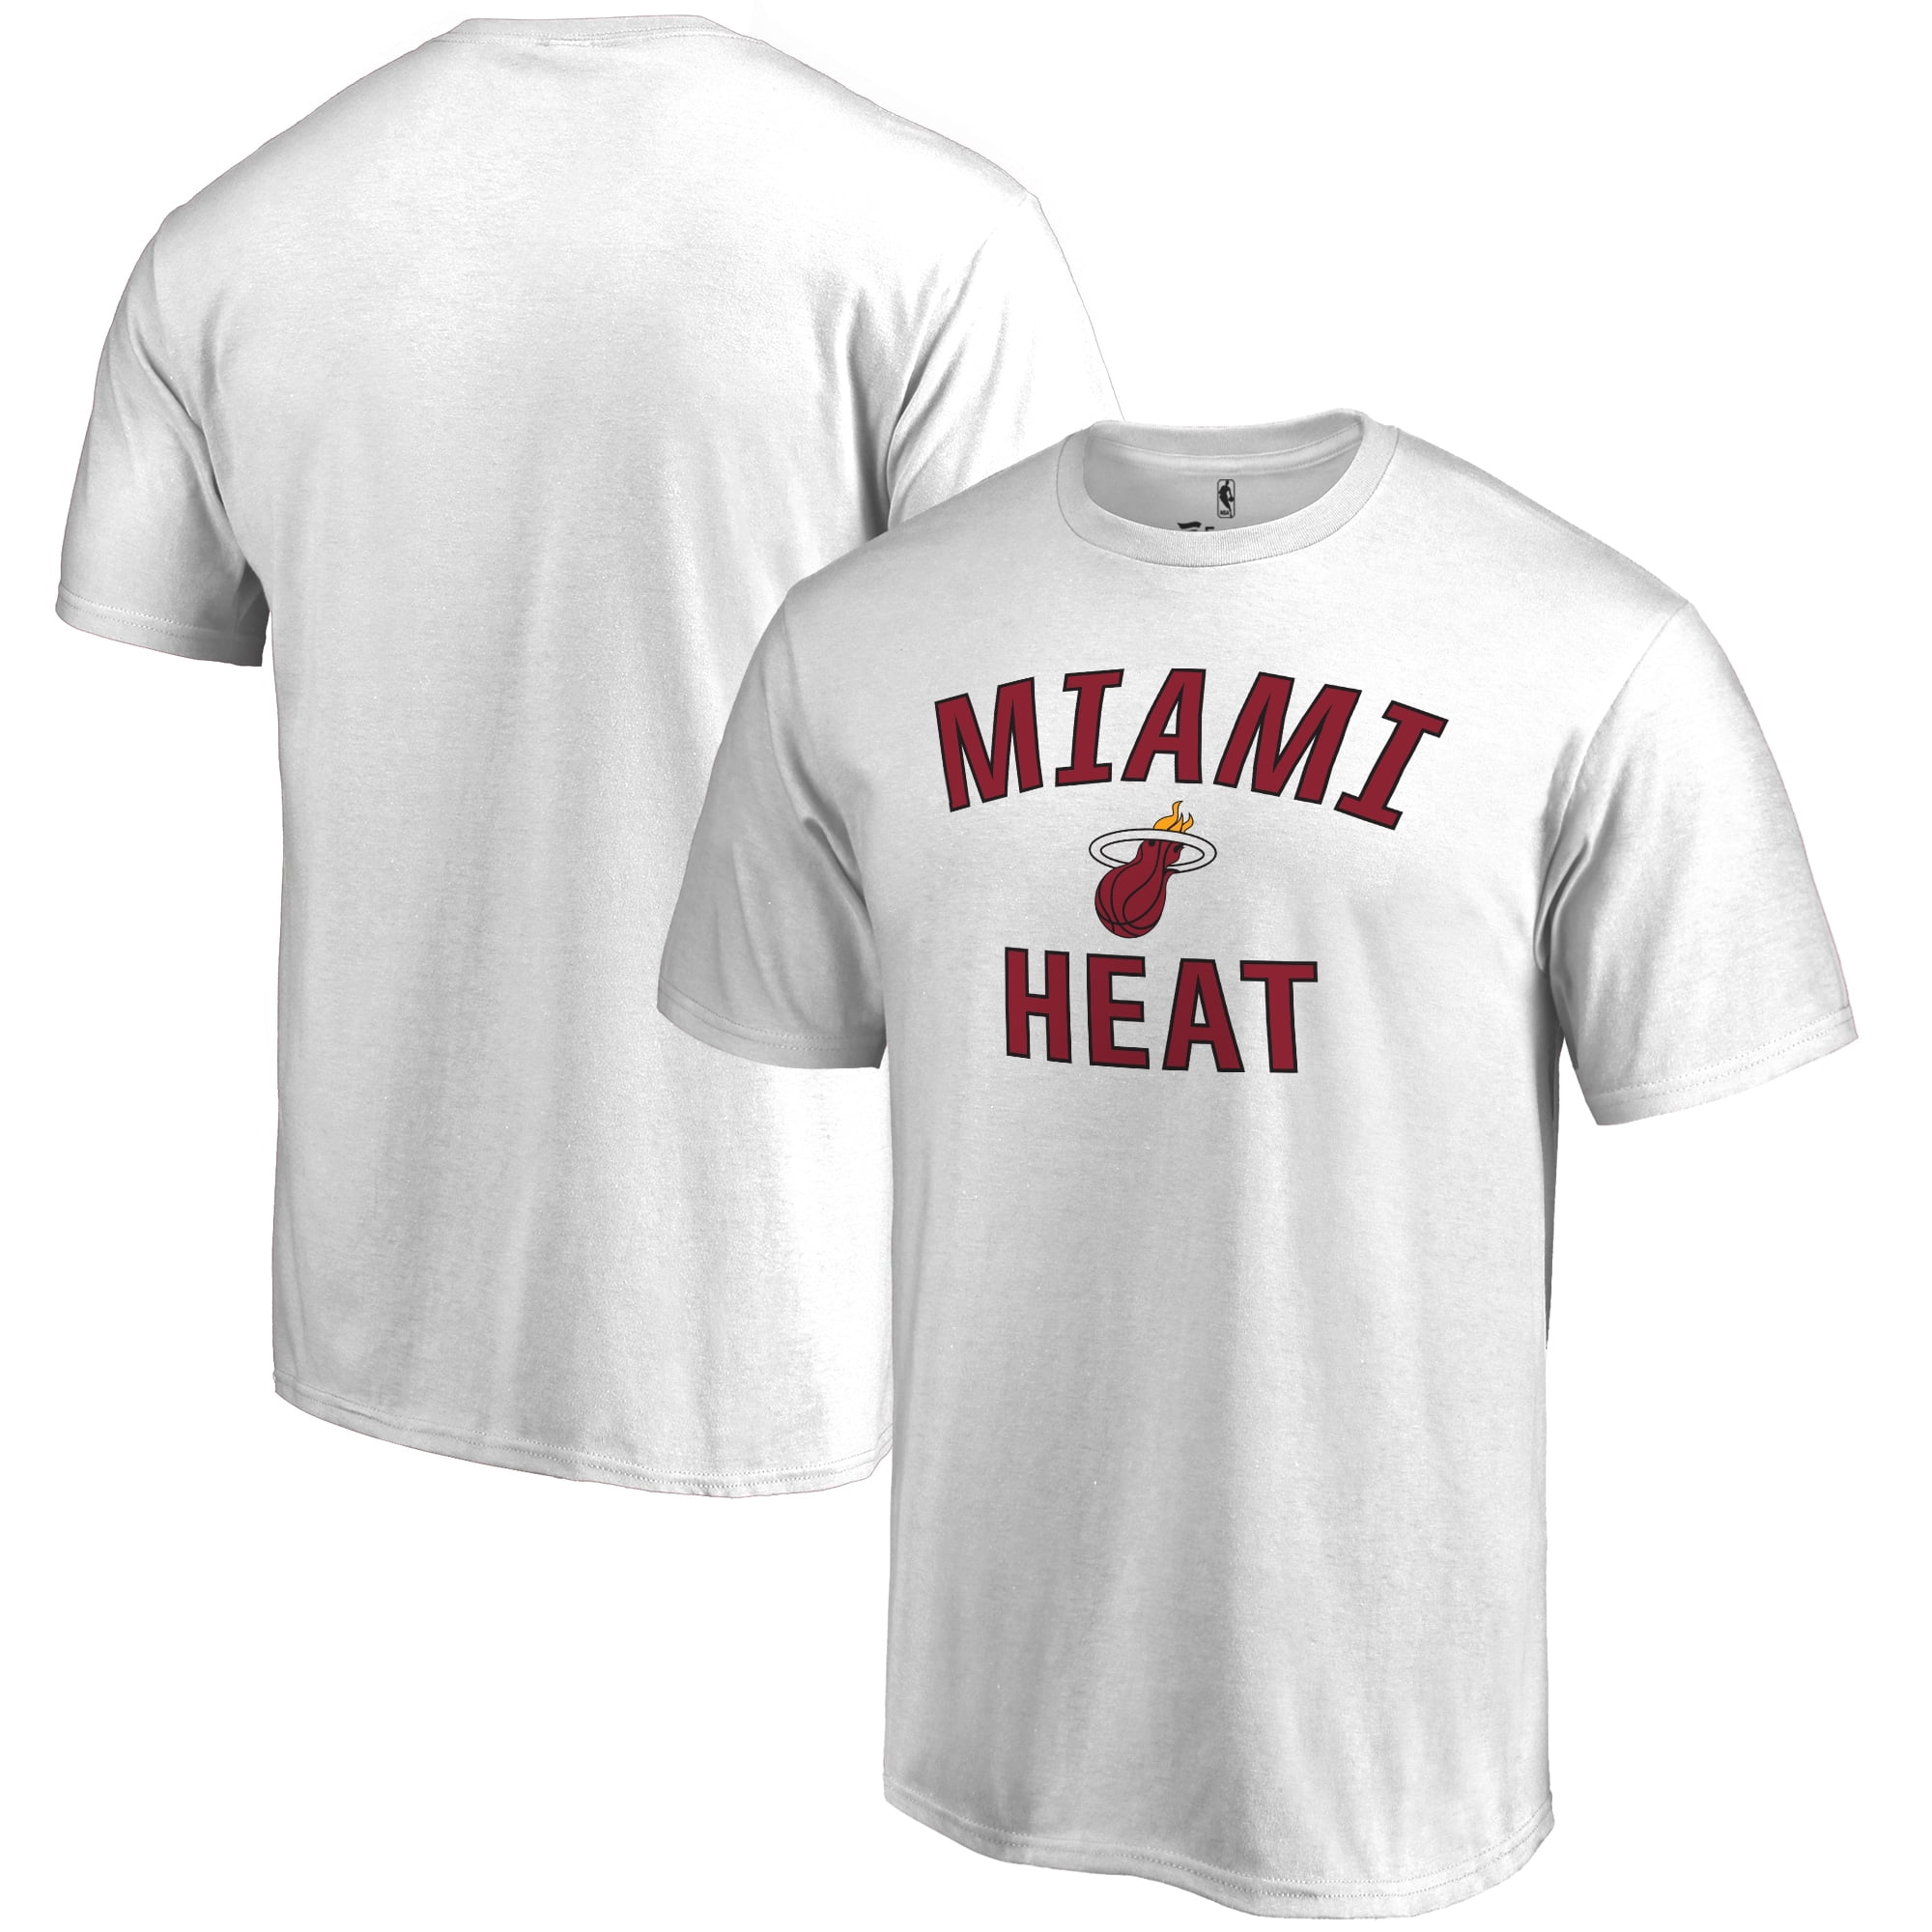 Miami Heat Victory Arch T-Shirt - White 